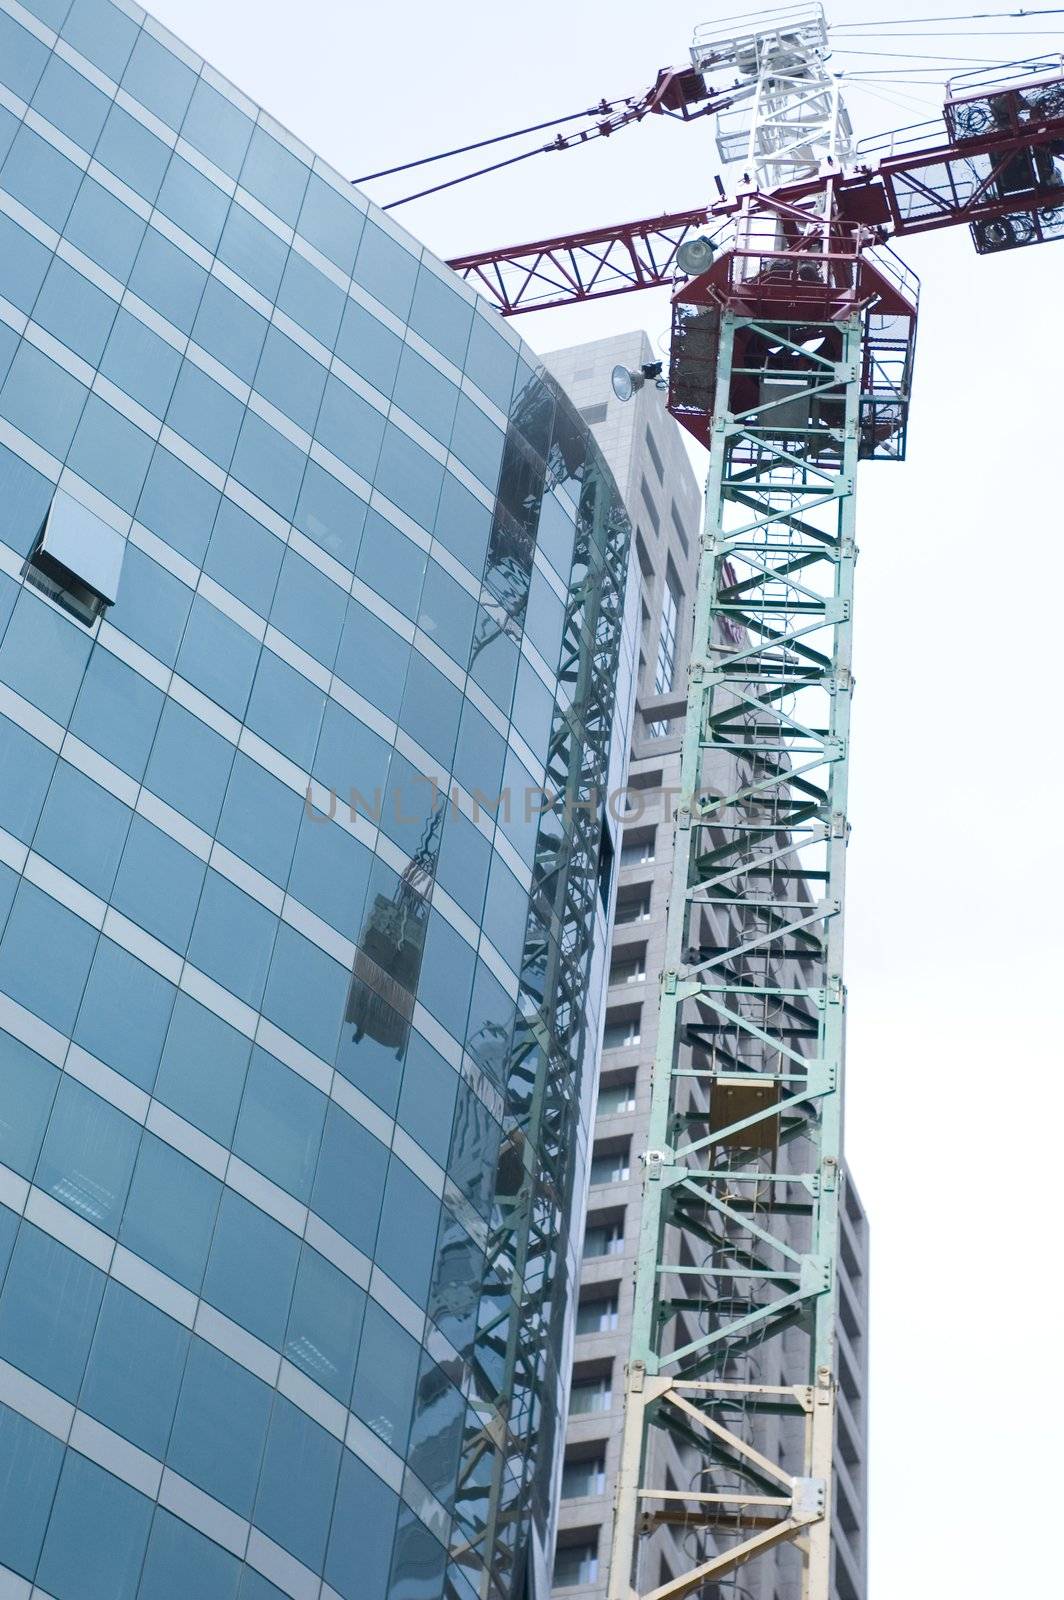 A Construction Site With a Building Crane